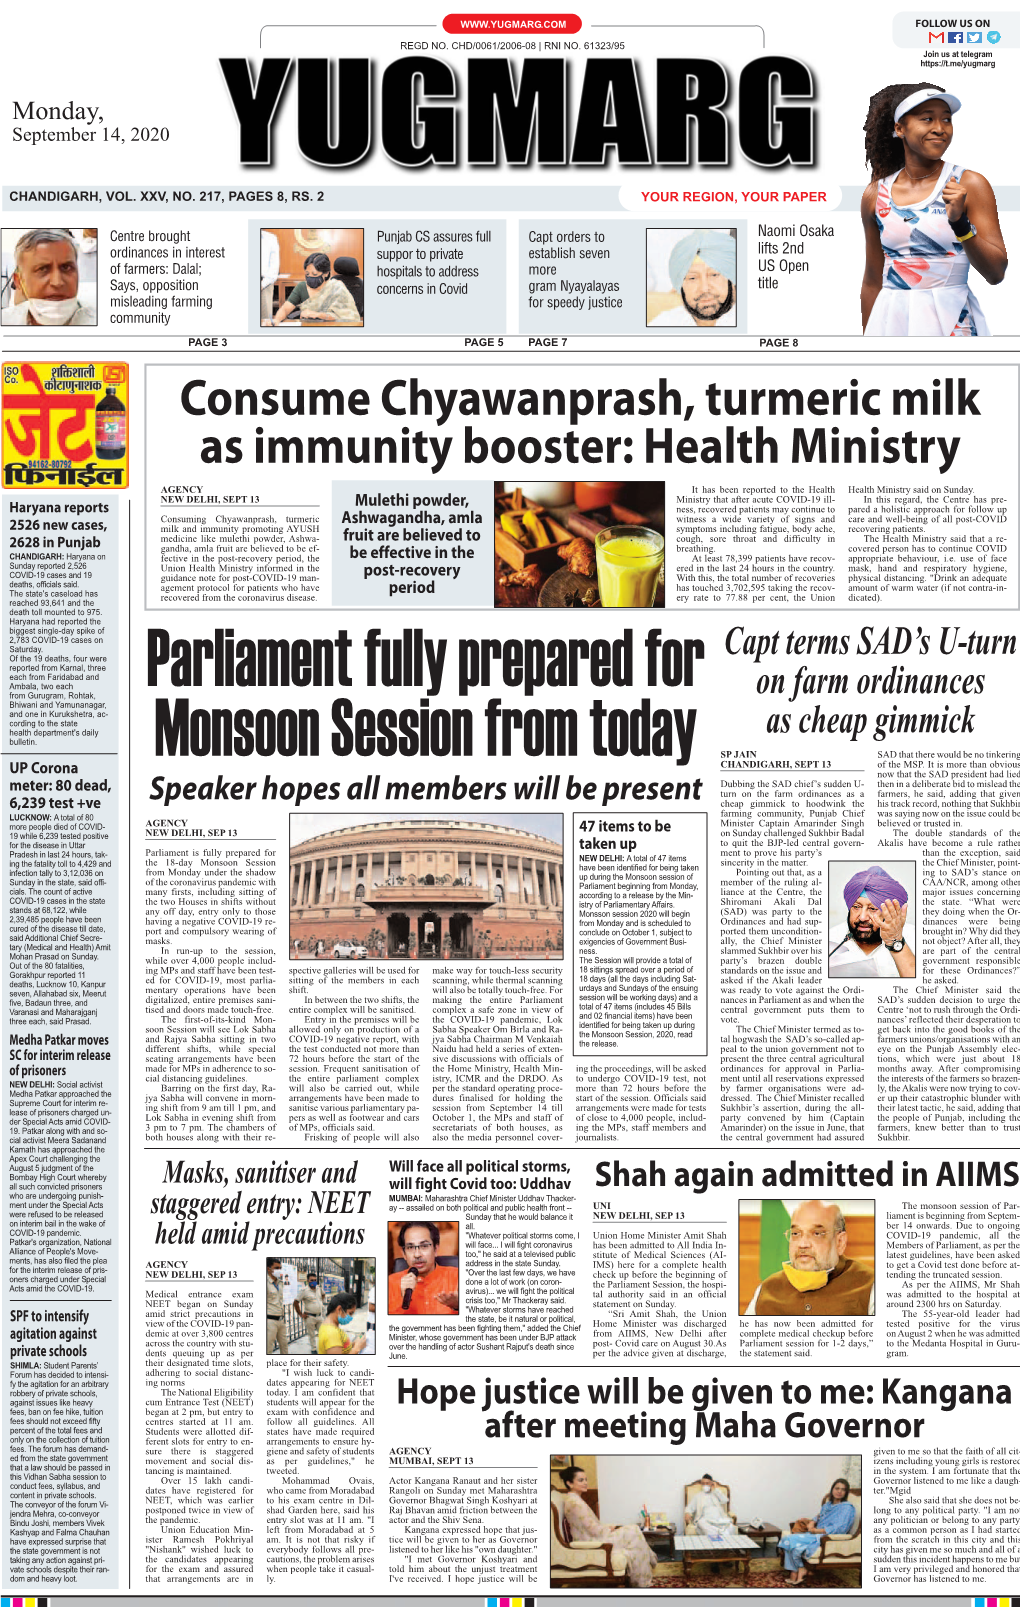 Consume Chyawanprash, Turmeric Milk As Immunity Booster: Health Ministry